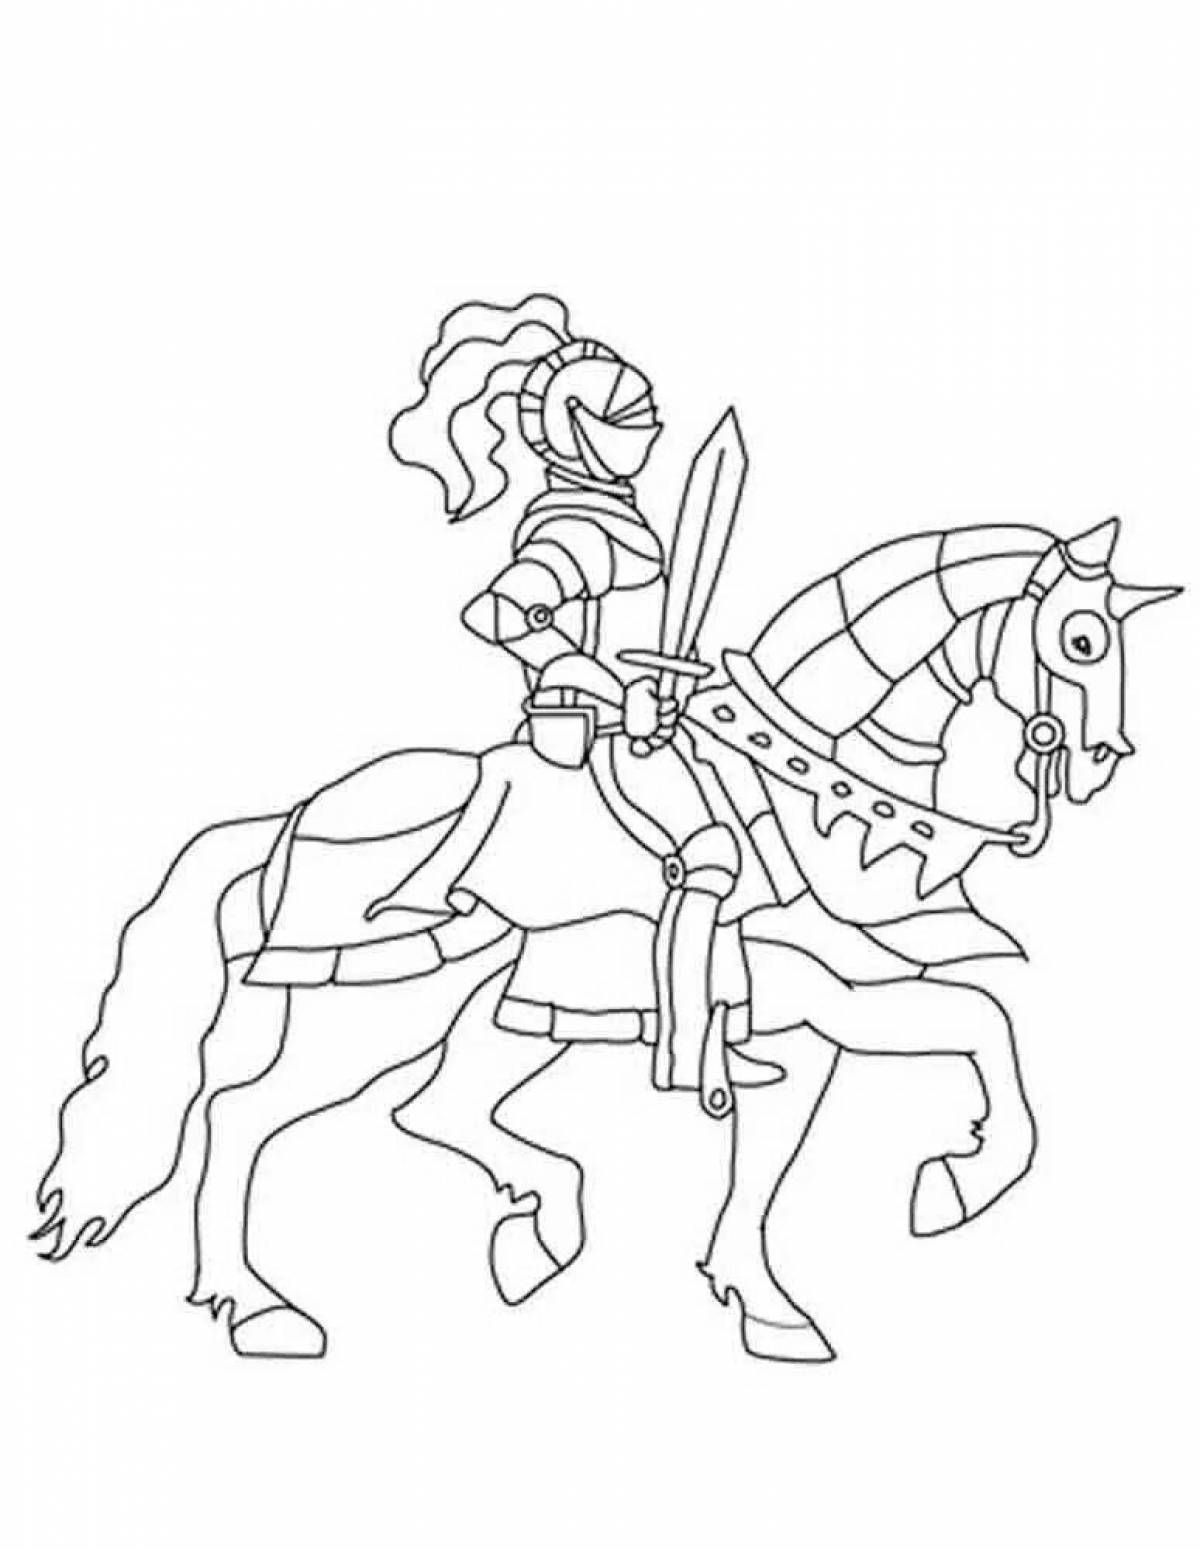 Impressive coloring book knight on horseback